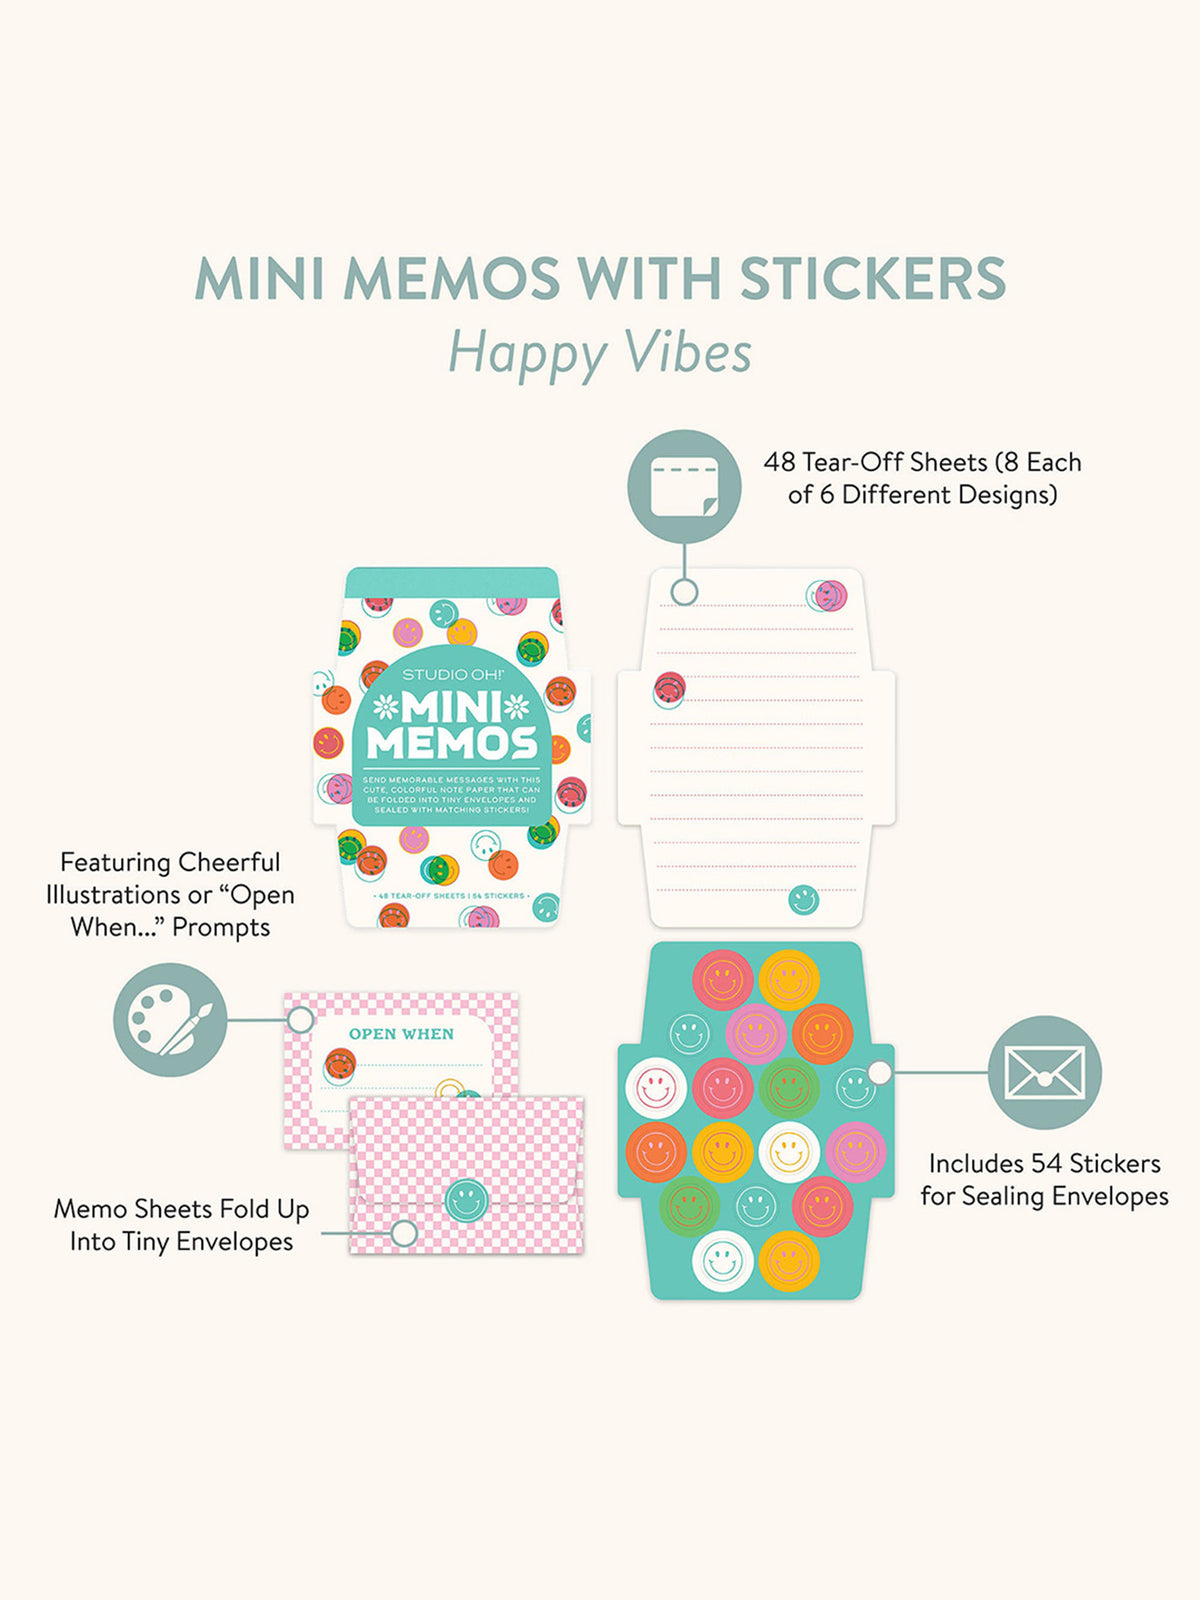 Happy Vibes Mini Memo with Stickers